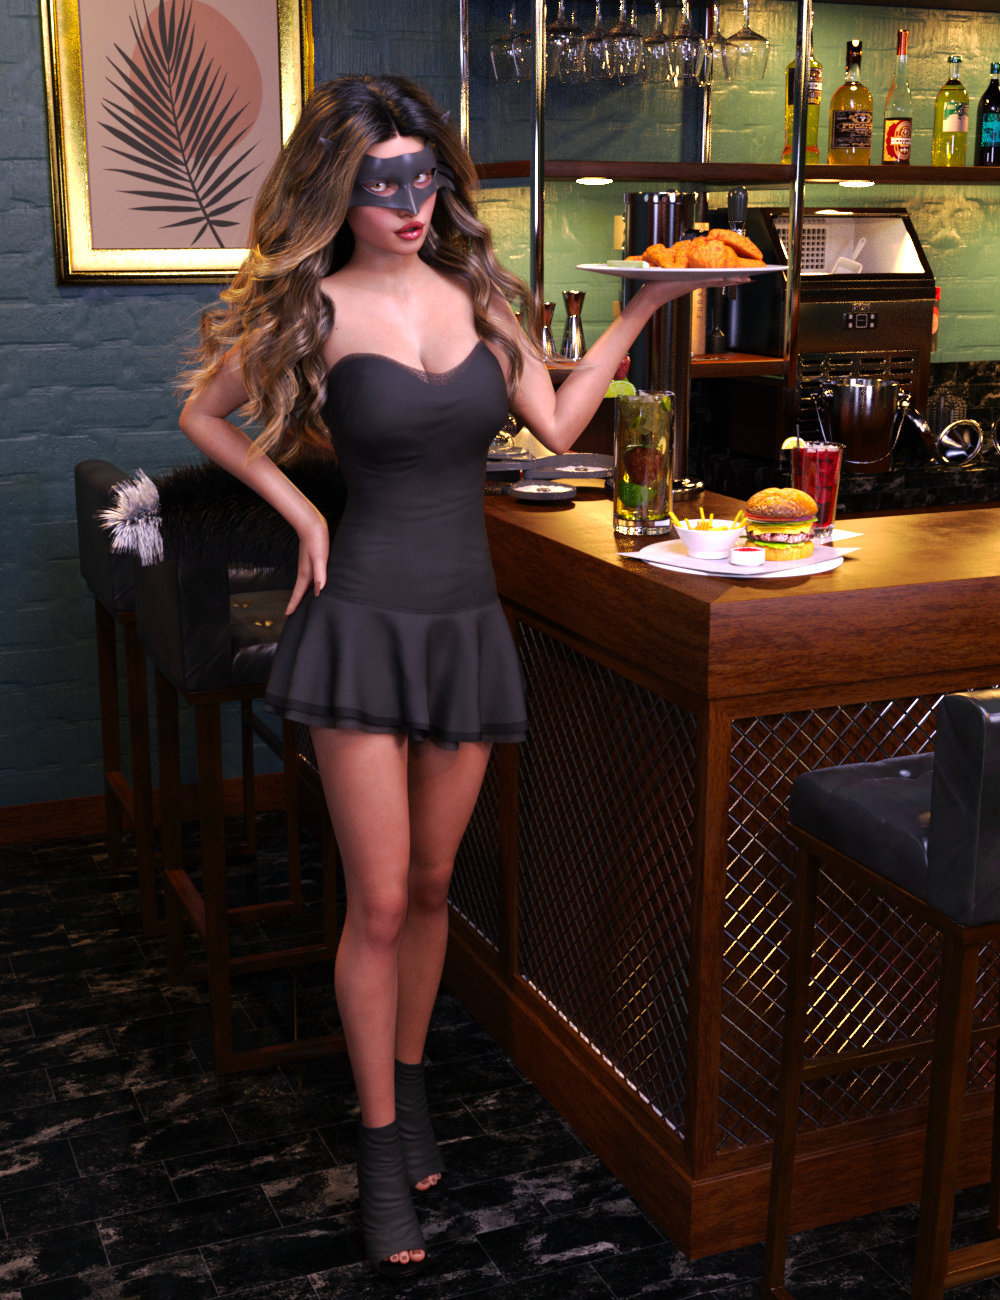 FG Foxy Waitress Poses for Genesis 8 Females by: IronmanFugazi1968, 3D Models by Daz 3D